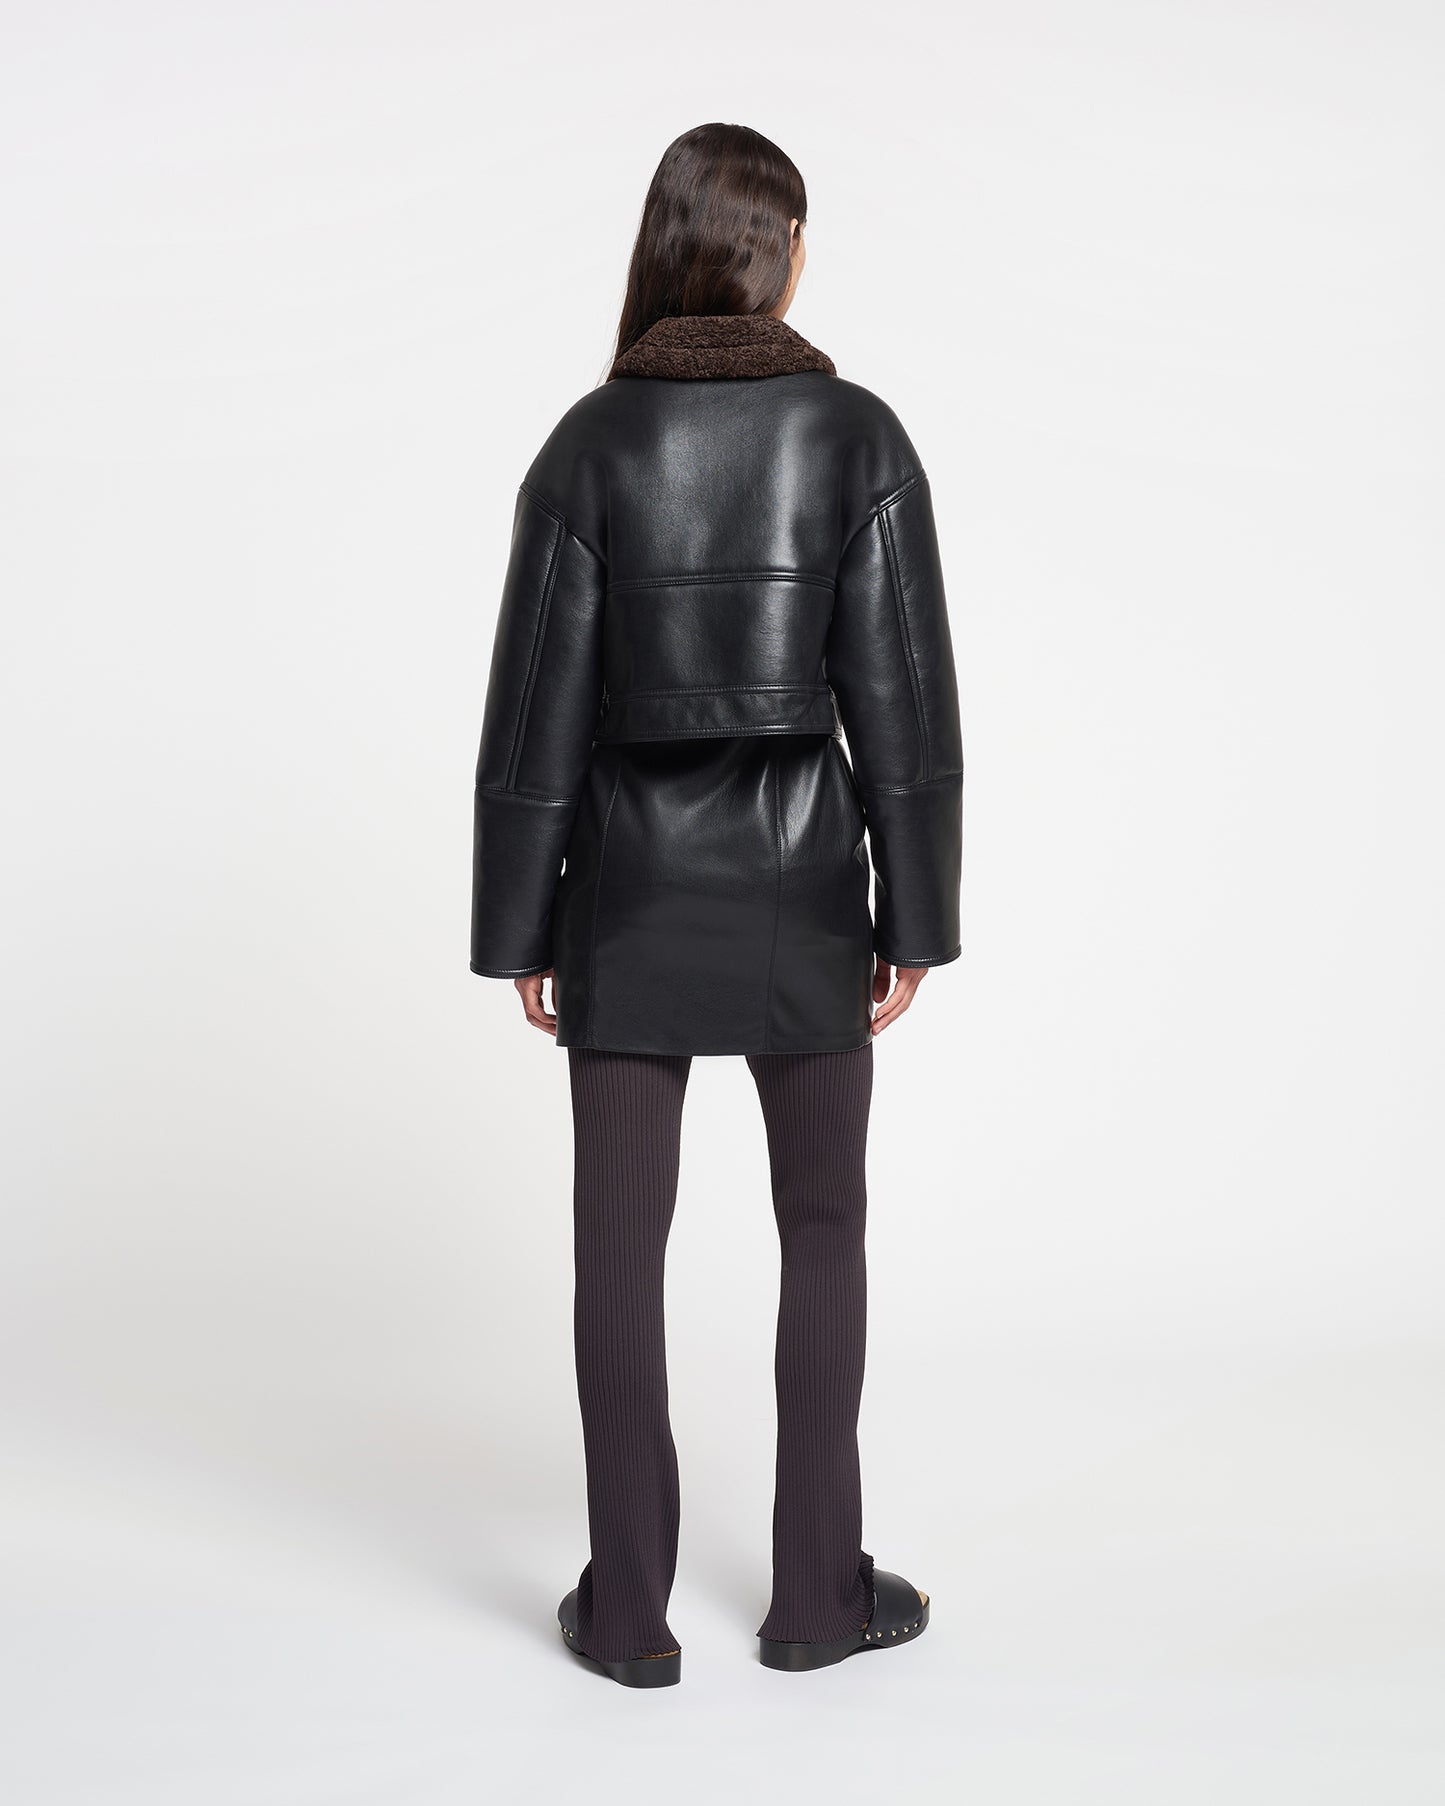 Karla - Regenerated Leather Jacket - Black Brown